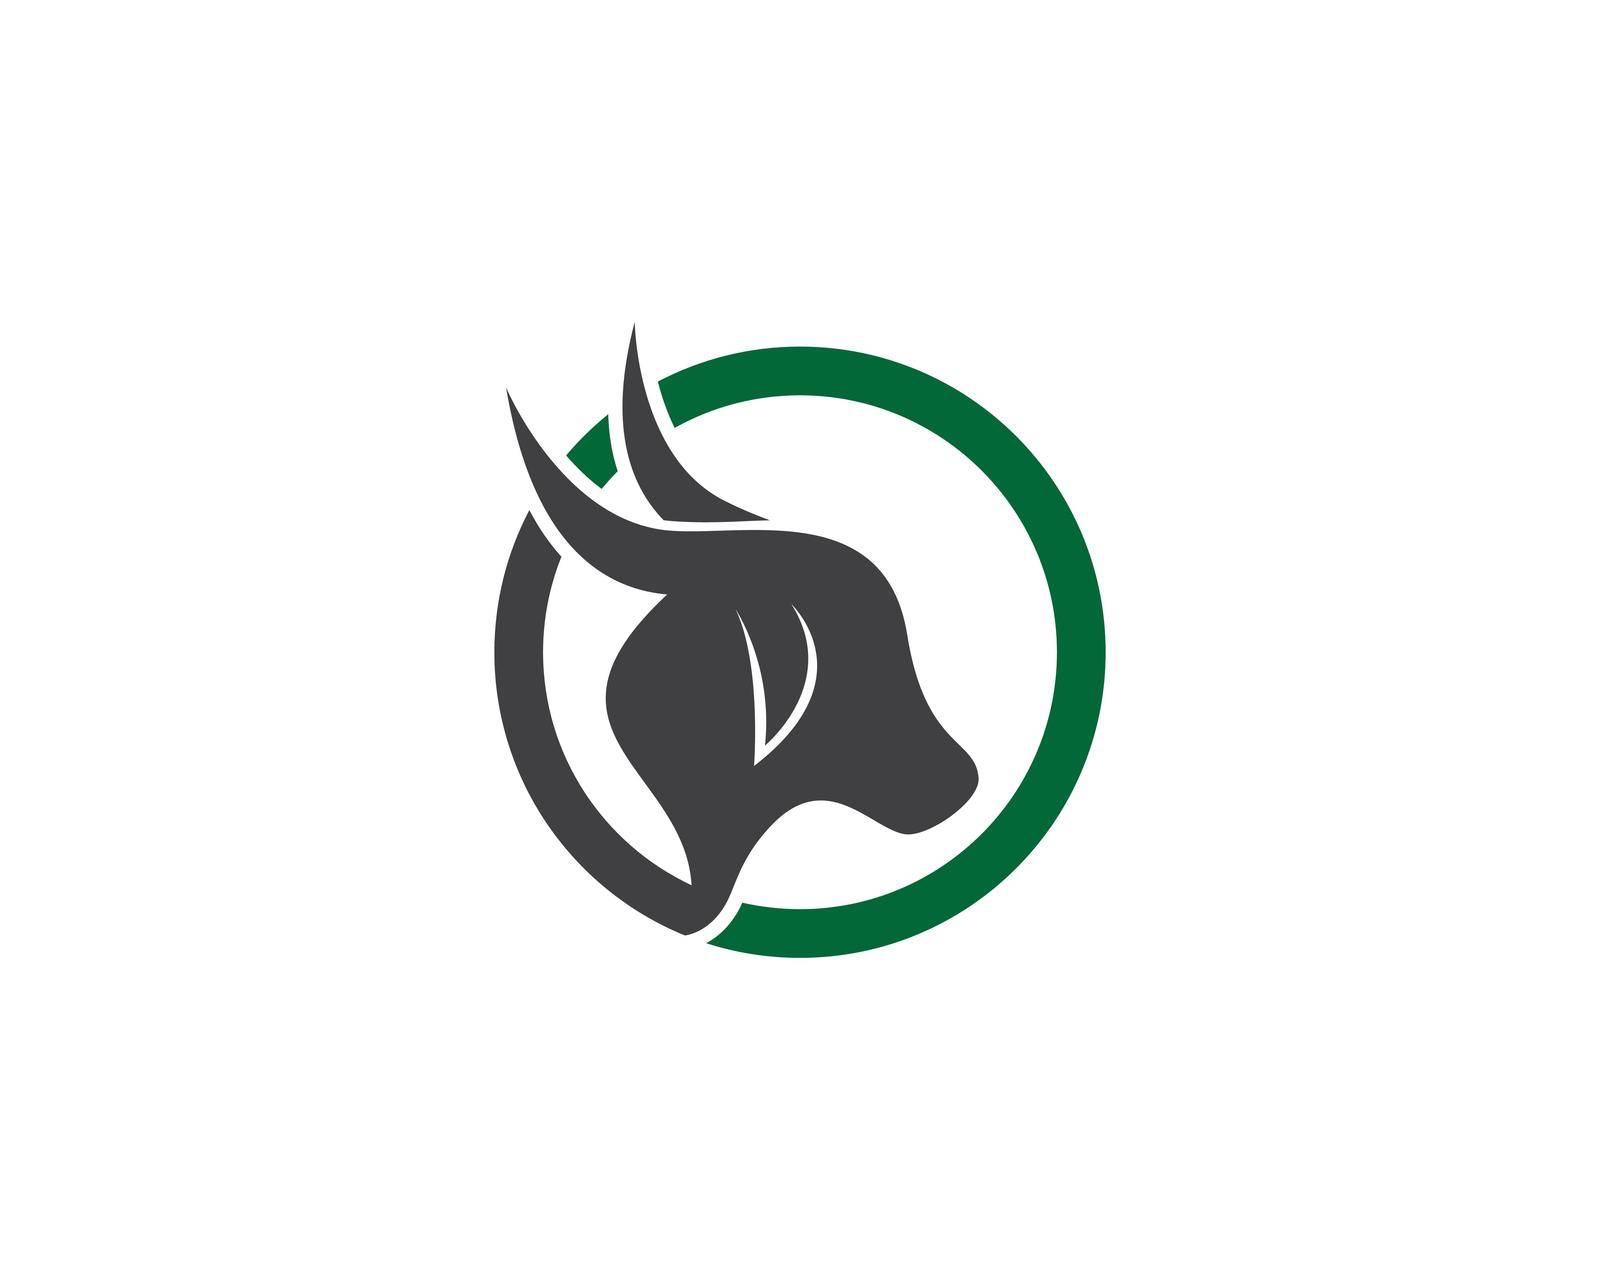 Bull logo template vector icon illustration by Attades19